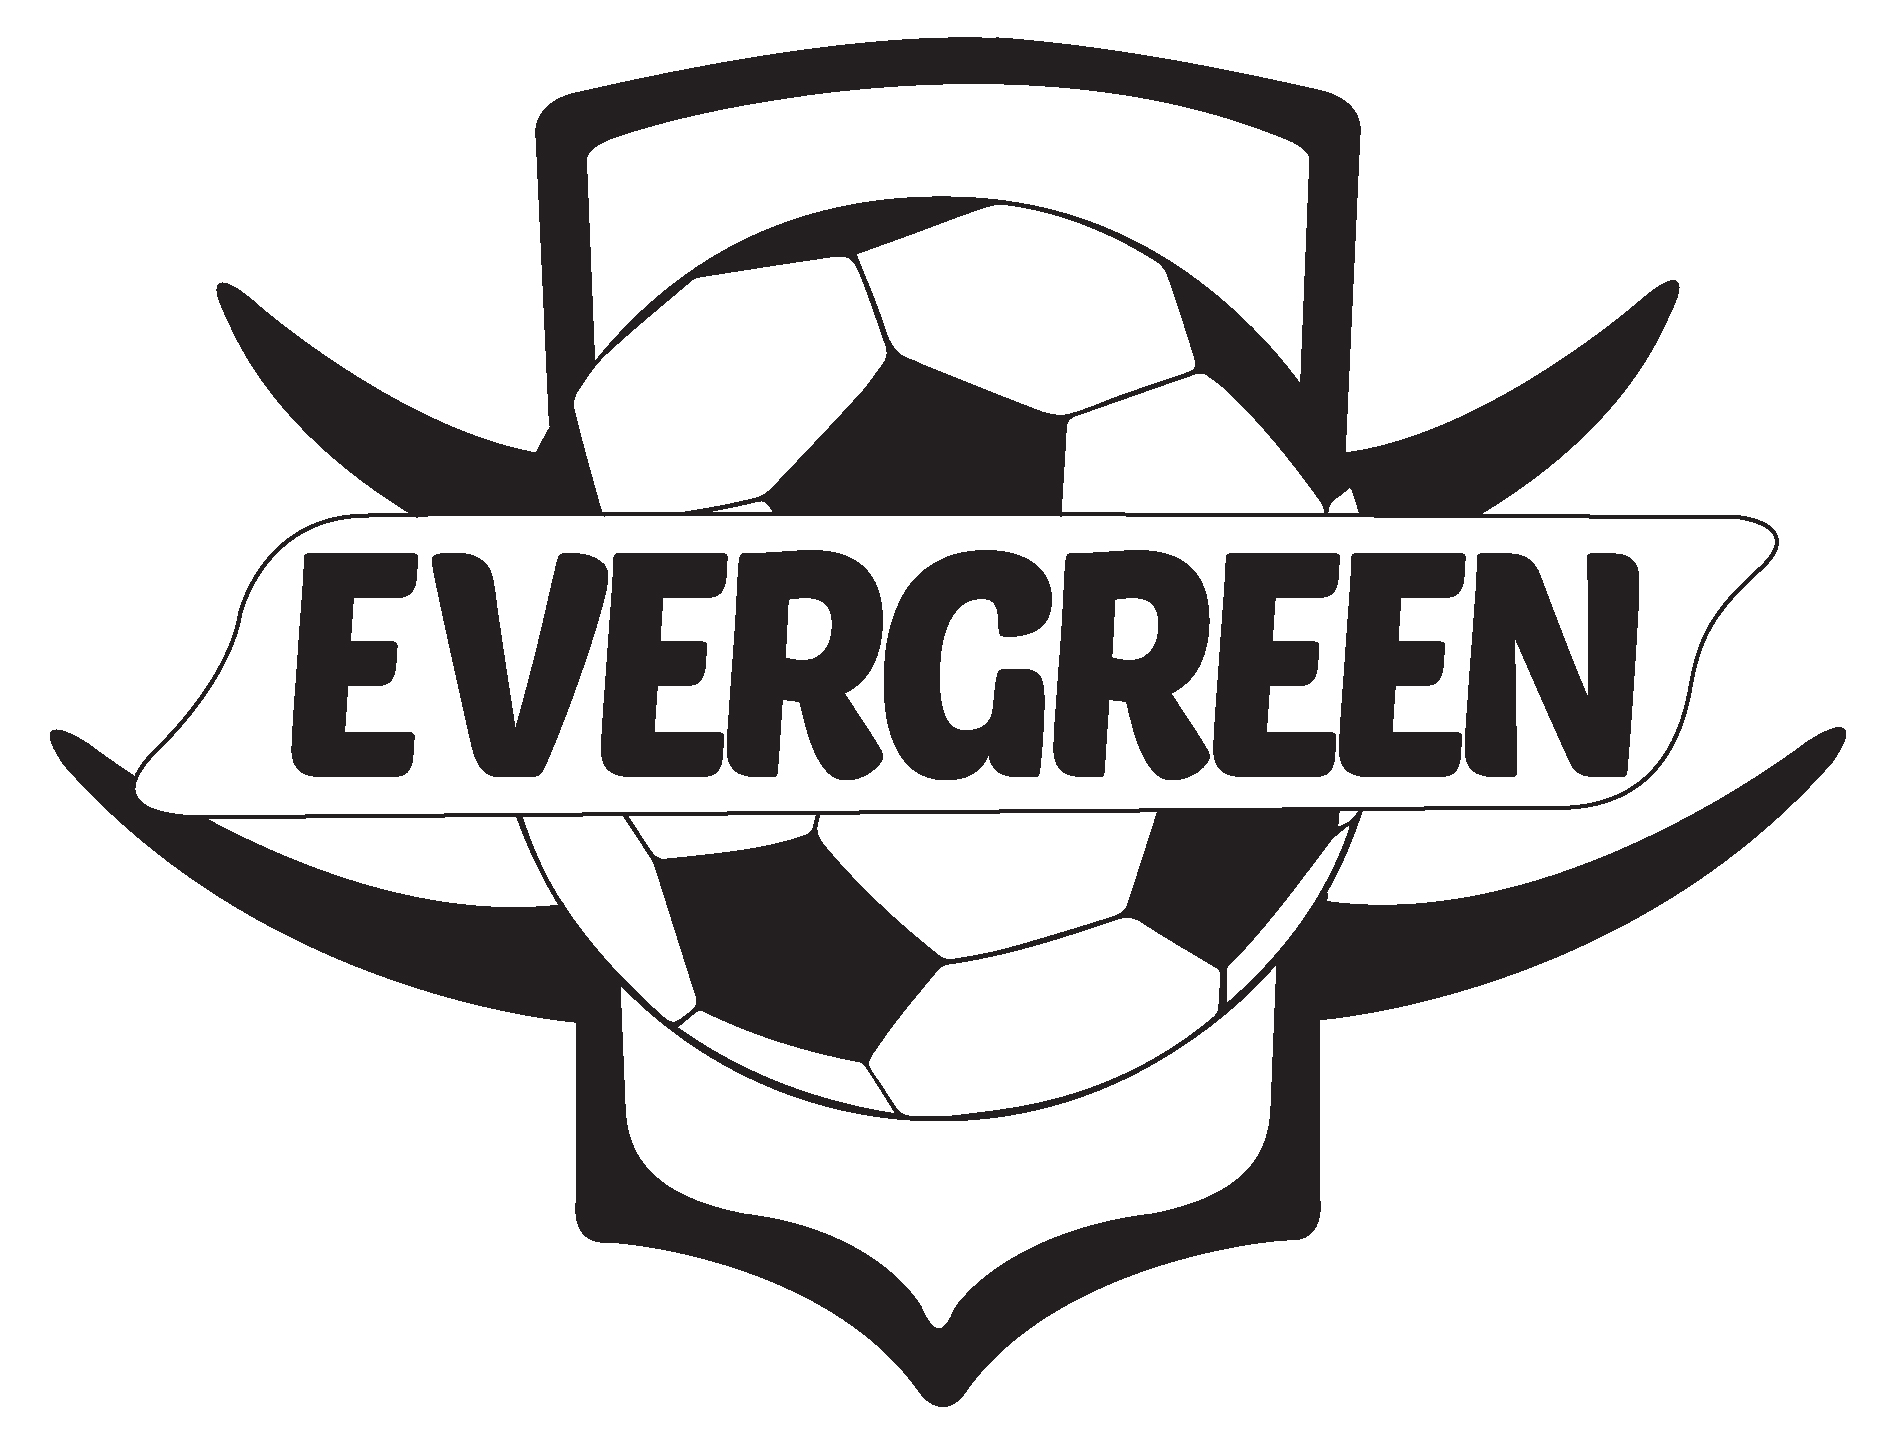 Evergreen Youth Soccer Club team badge